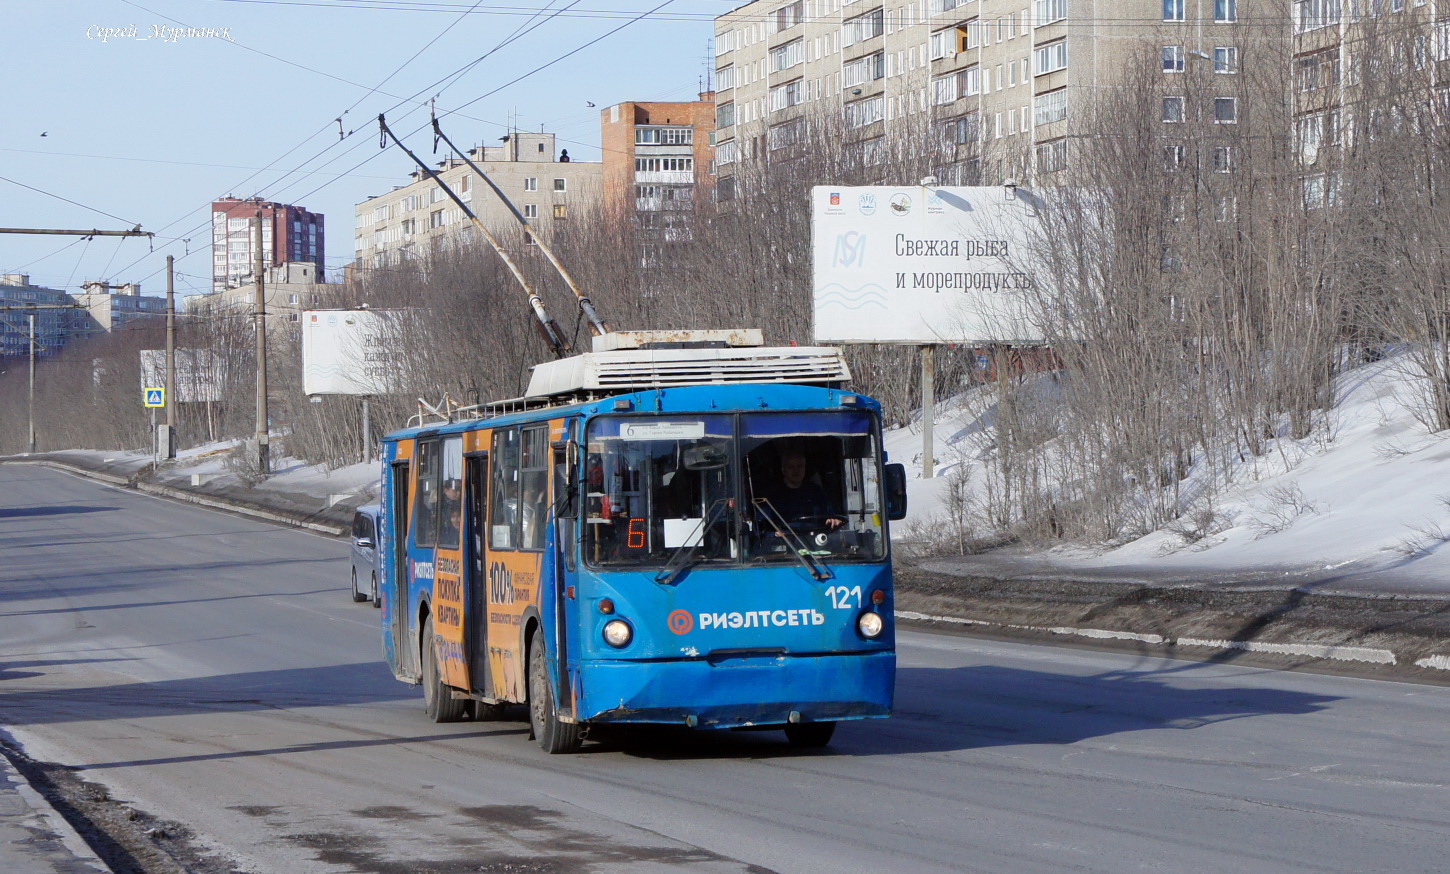 Murmansk, VZTM-5284.02 nr. 121